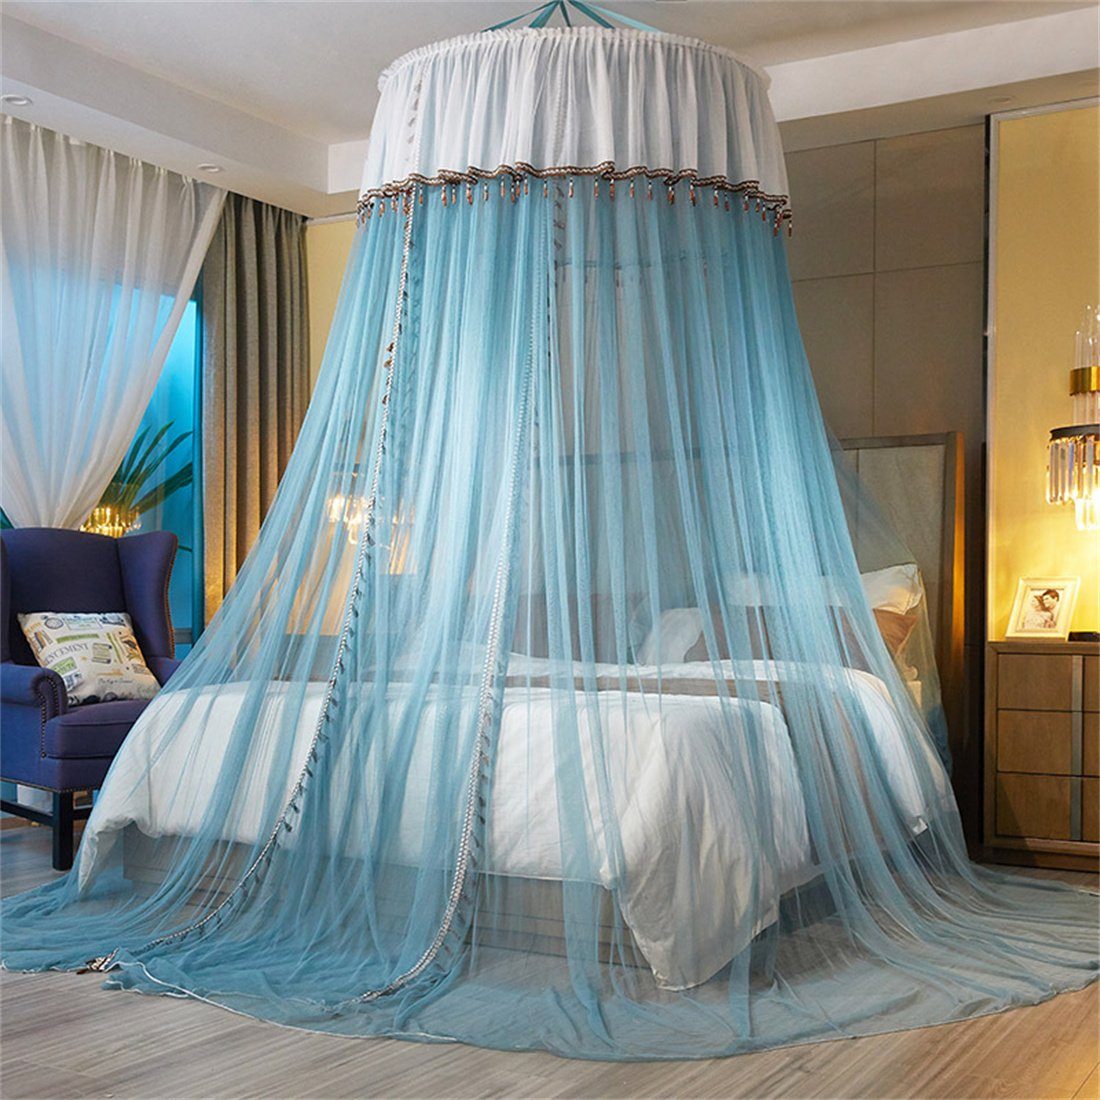 Betthimmel ZAXSD Bettdecke Vorhang Prinzessin blau Bett Stil Moskitonetz,Anti-Moskito Kuppel